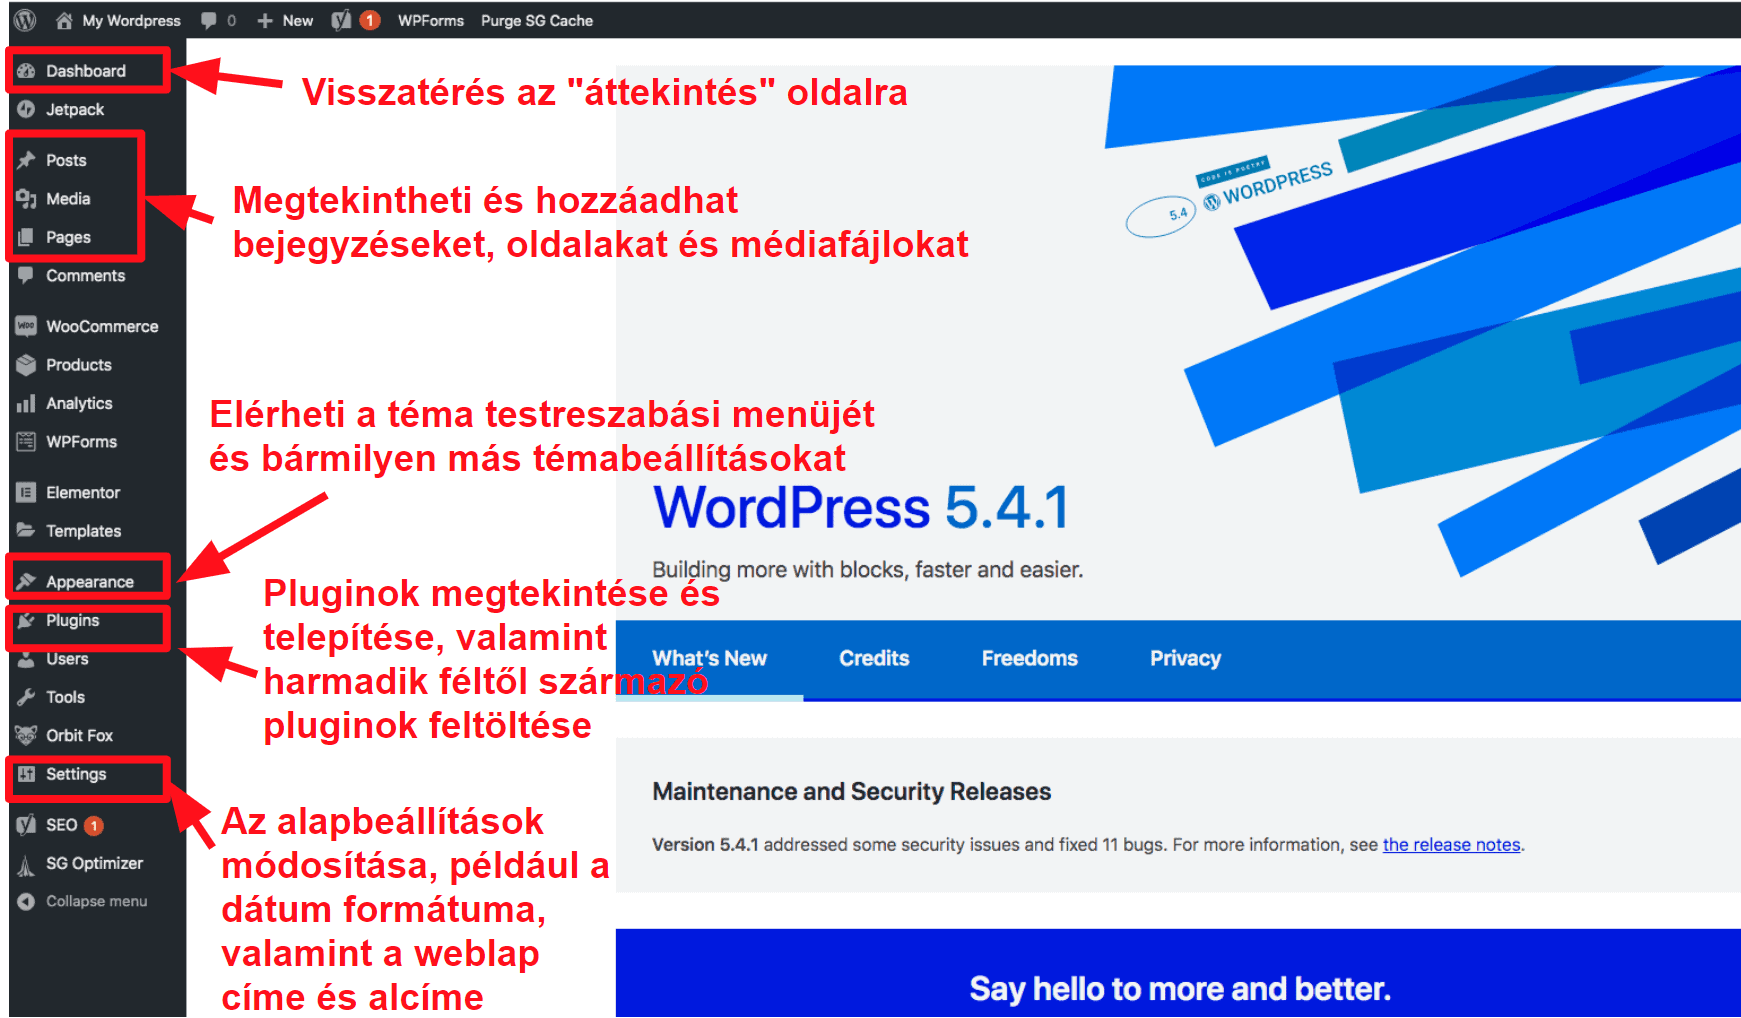 The WordPress dashboard HU16